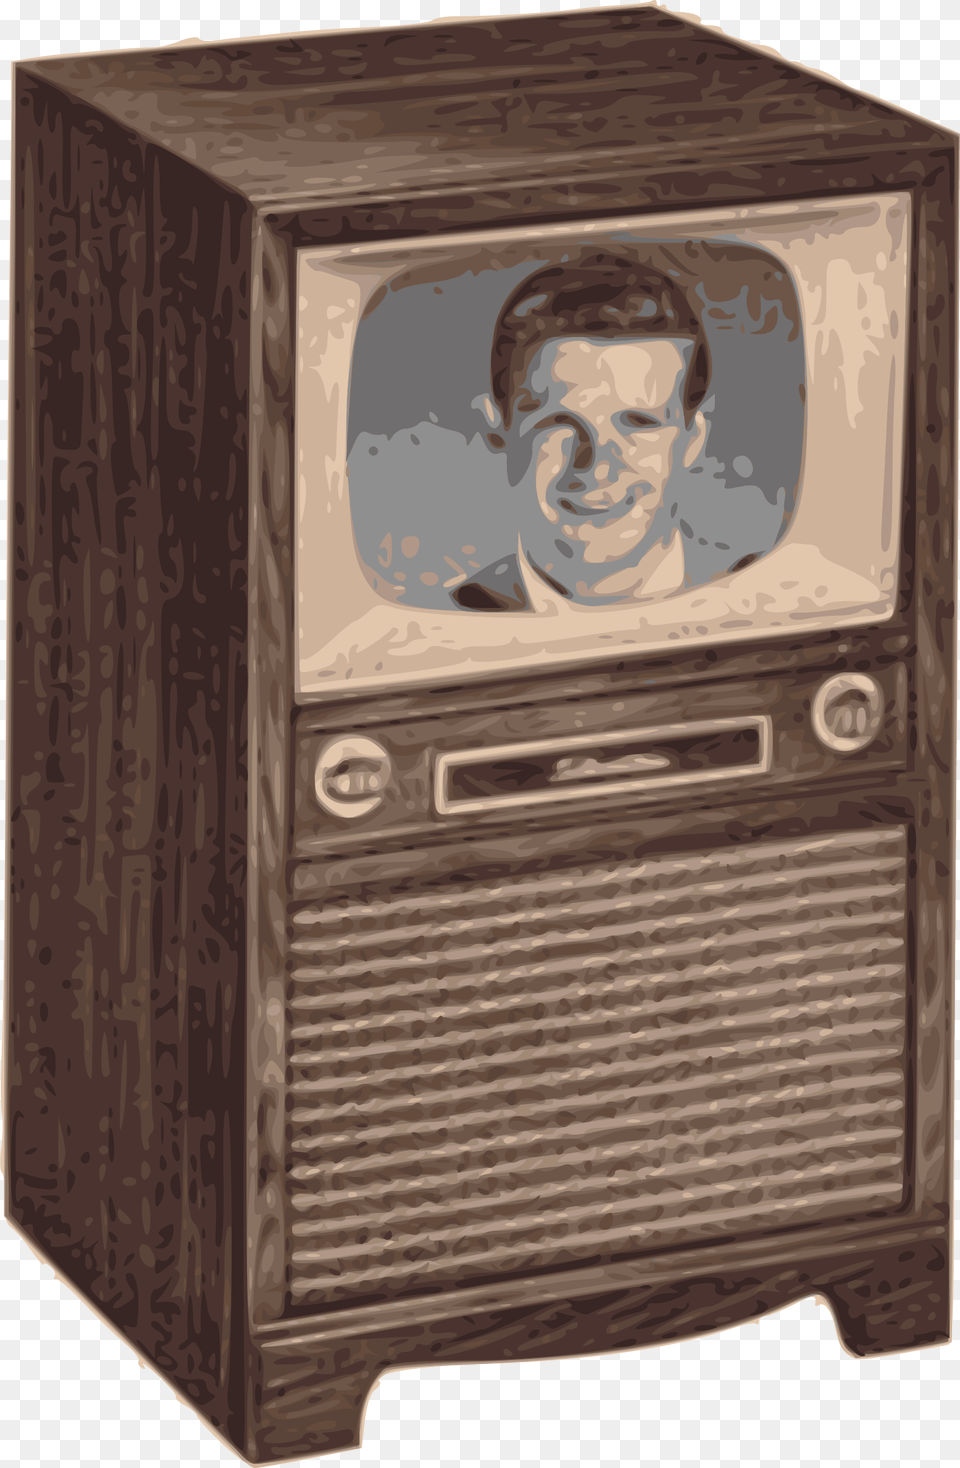 Retro Tv Clip Arts Vintage Tv Vector Free, Computer Hardware, Screen, Monitor, Hardware Png Image